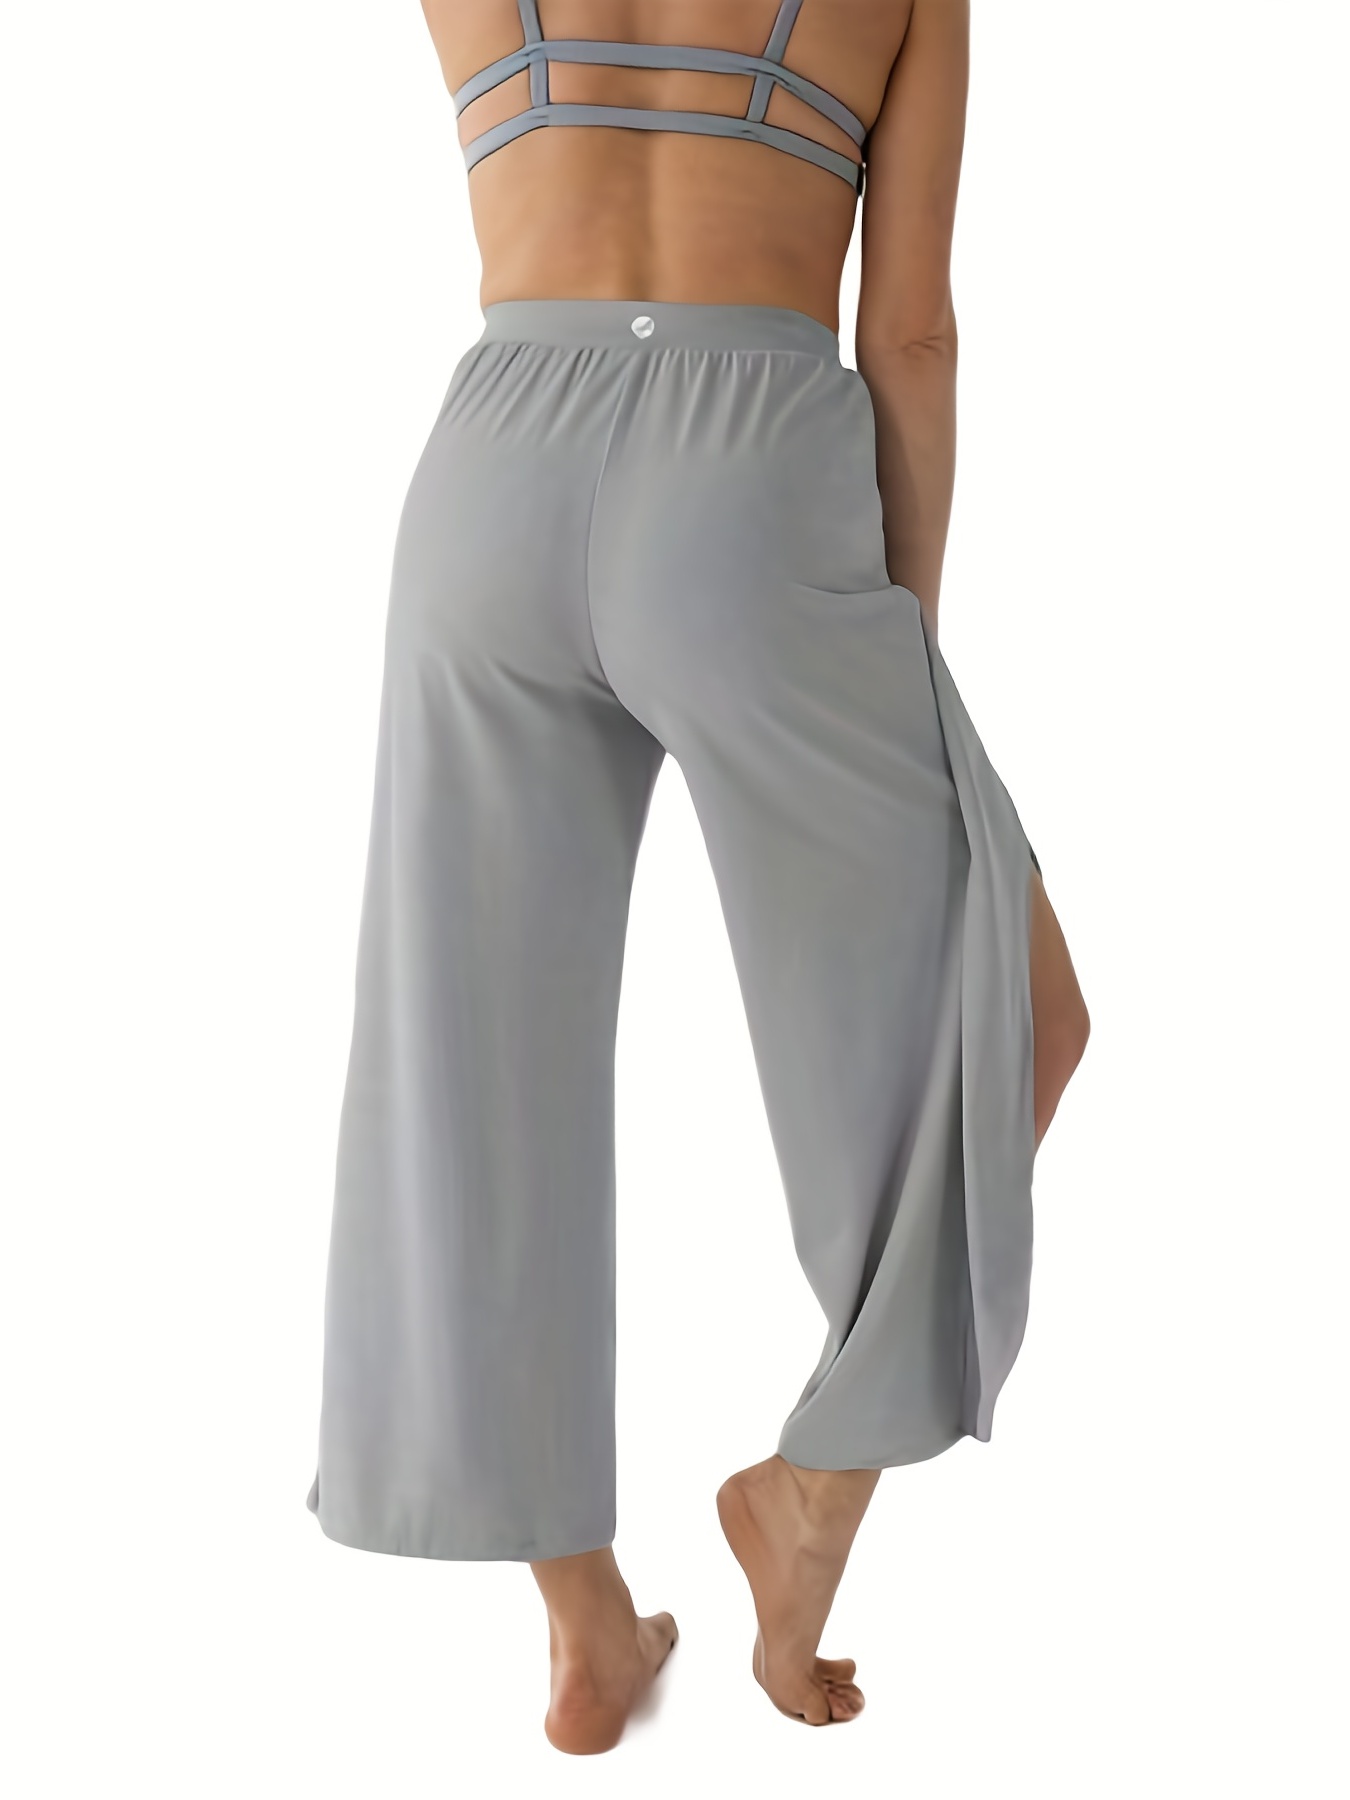 Pantalón yoga pernera ancha abertura cintura en V bolsillo